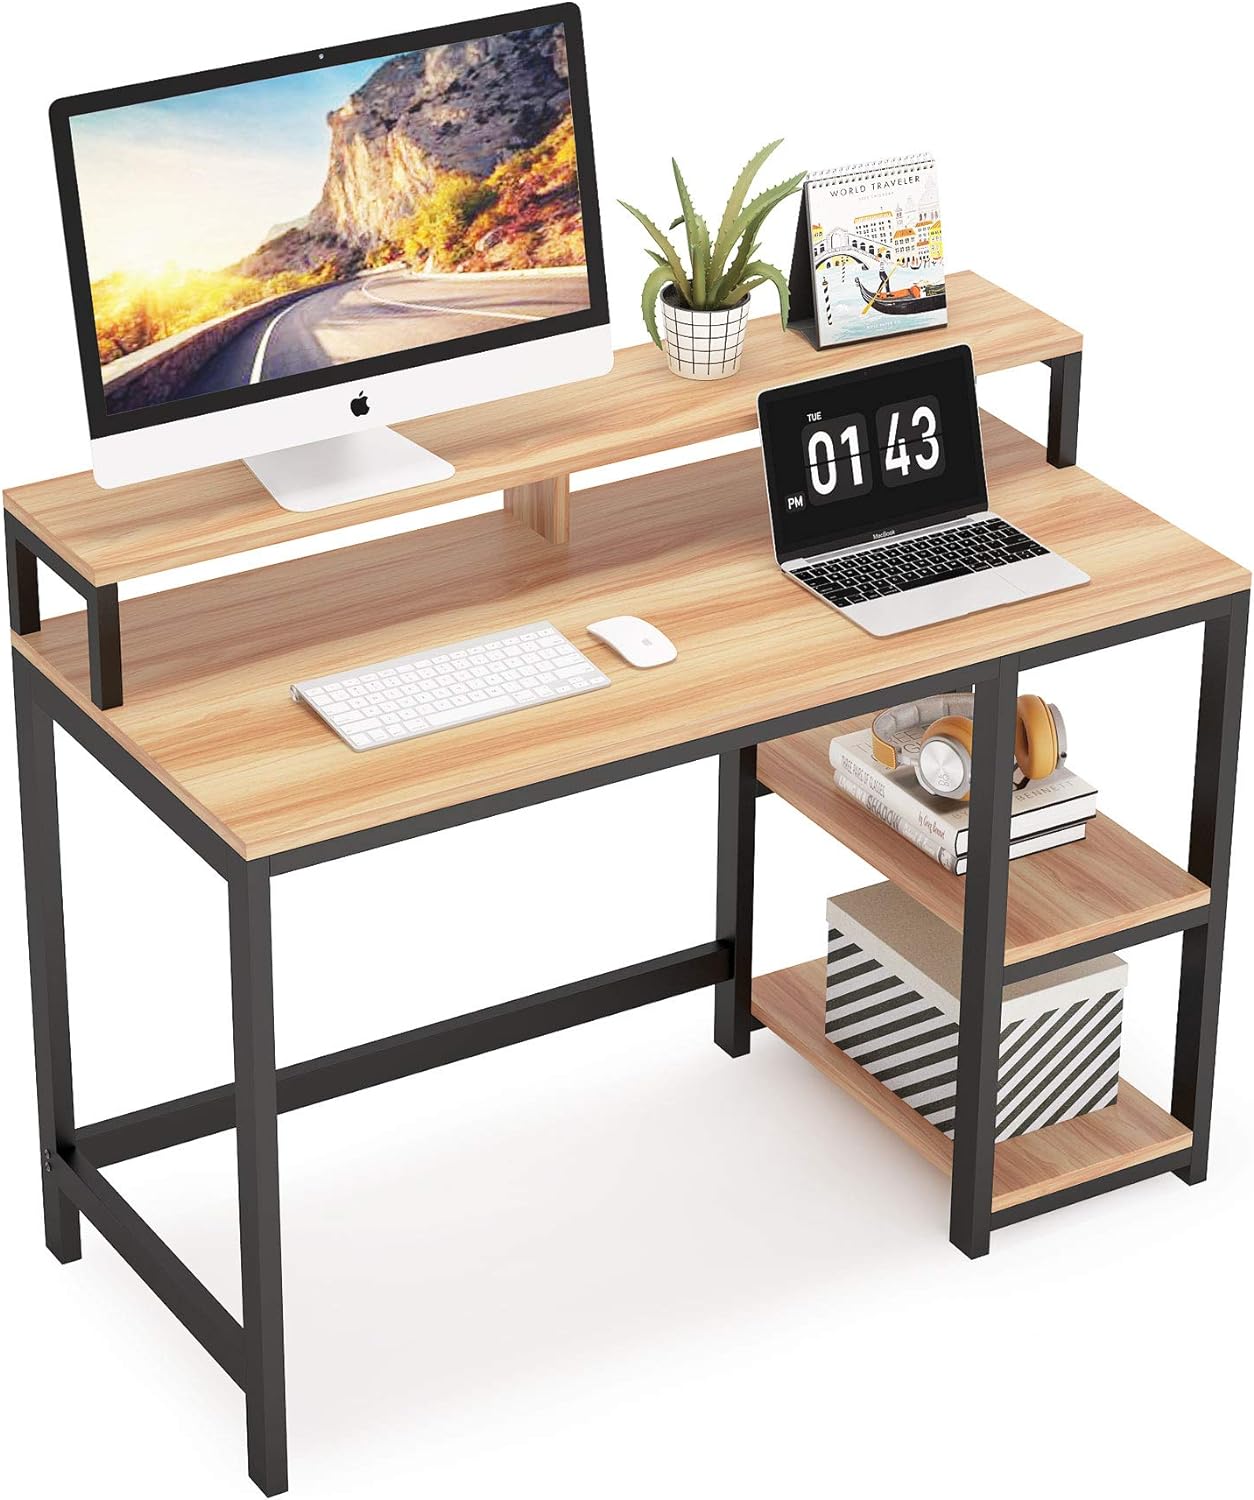 Сomputer desk, office desk, desk computer, buy computer desk, pc desk, study desk, work desk - Tribesigns 6